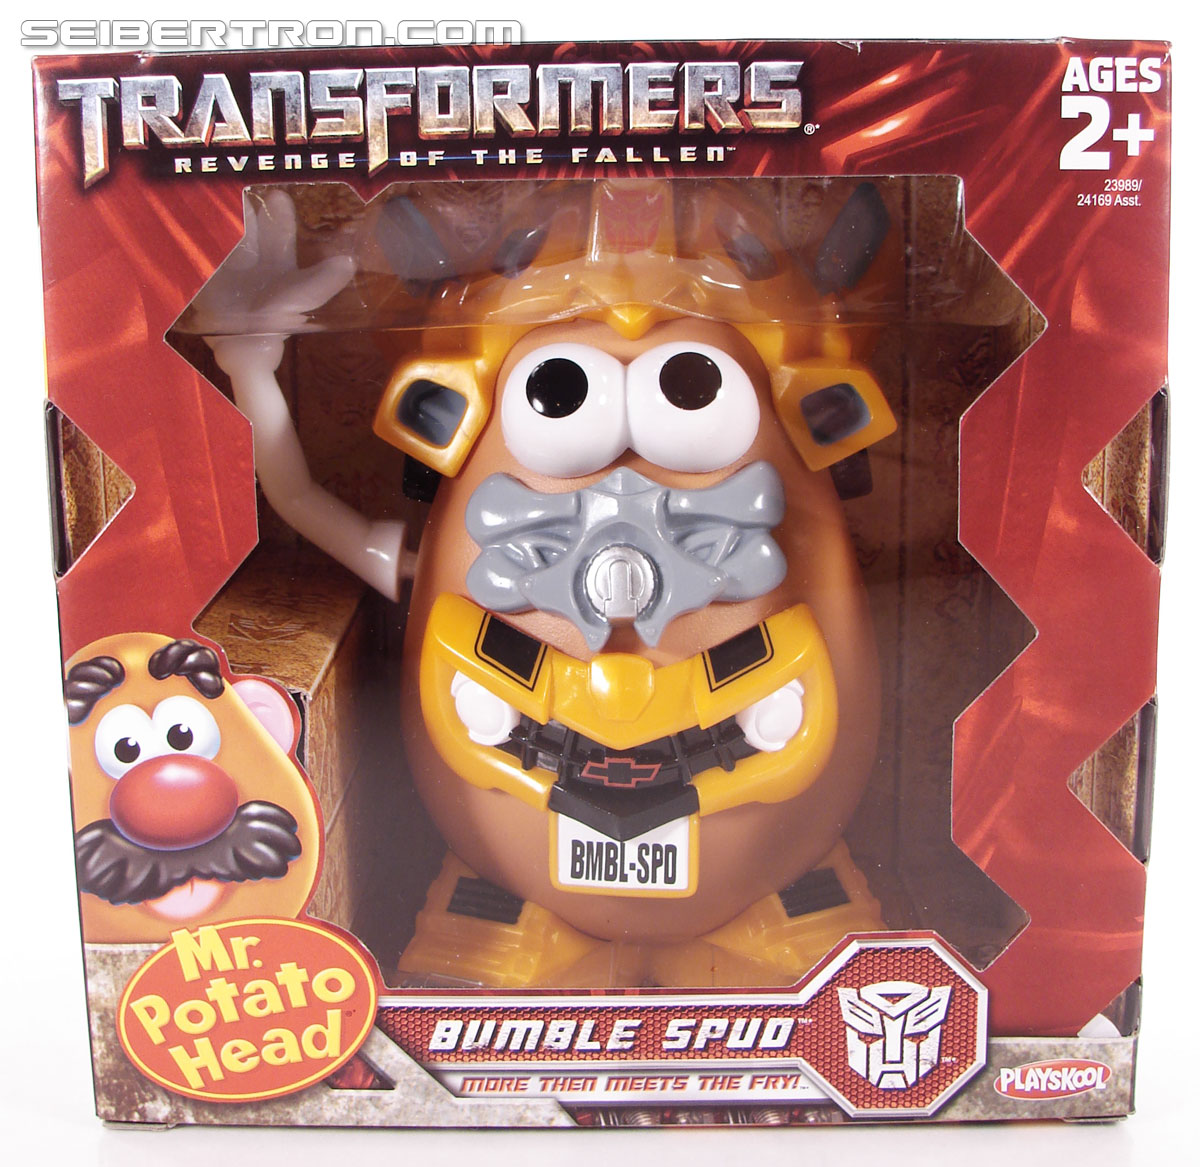 Transformers Mr. Potato Head Bumble Spud (Image #1 of 59)